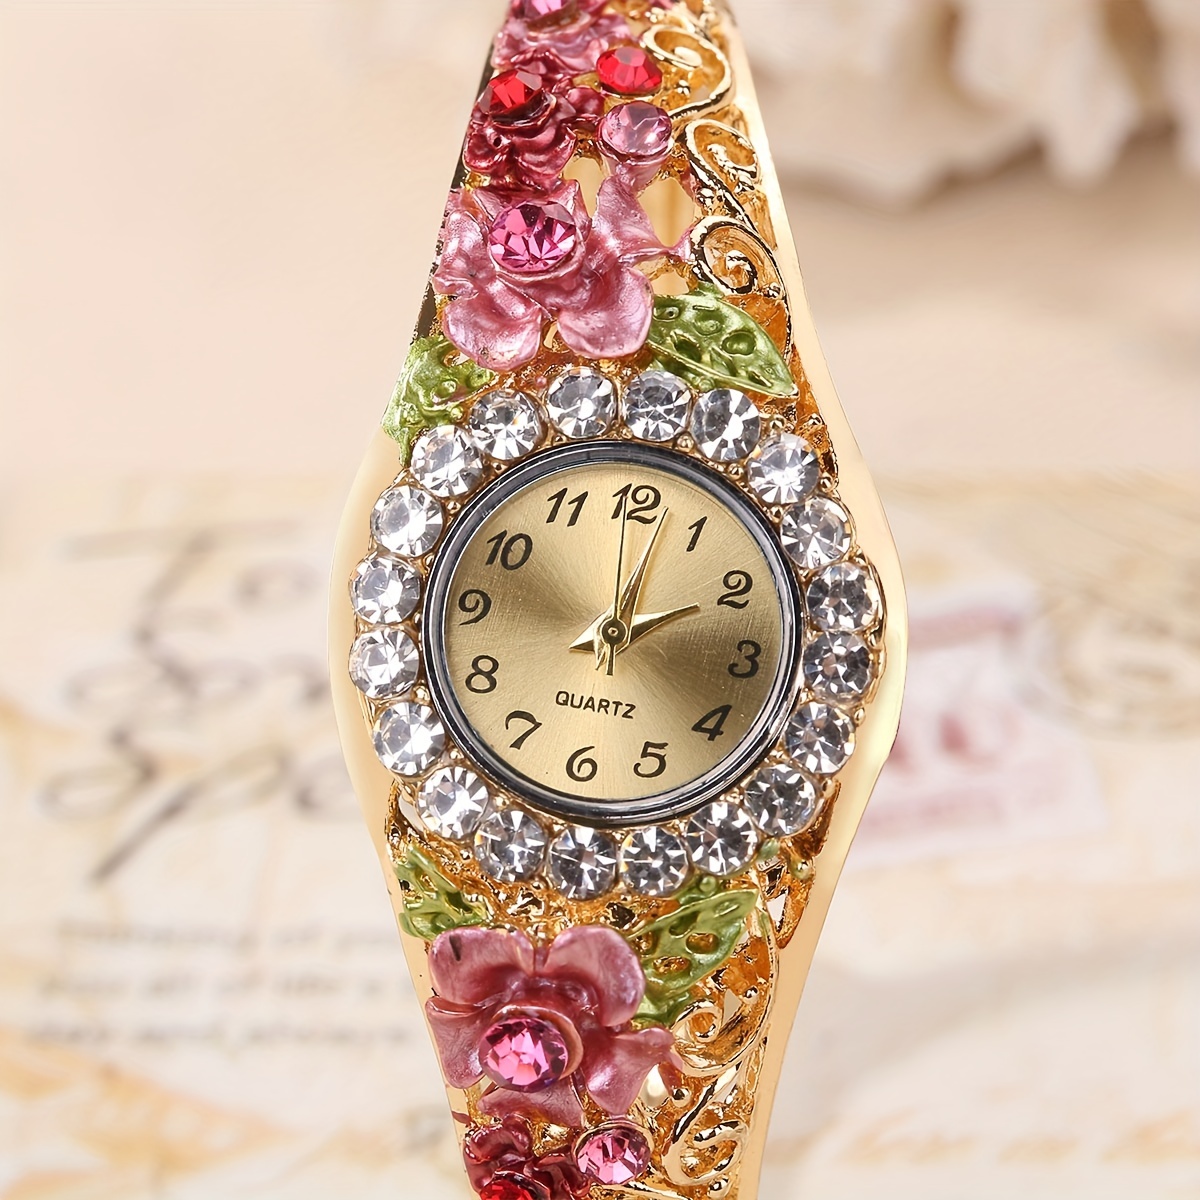 2pcs set womens watch vintage flower quartz bangle watch baroque rhinestone analog wrist watch necklace gift for mom her details 6